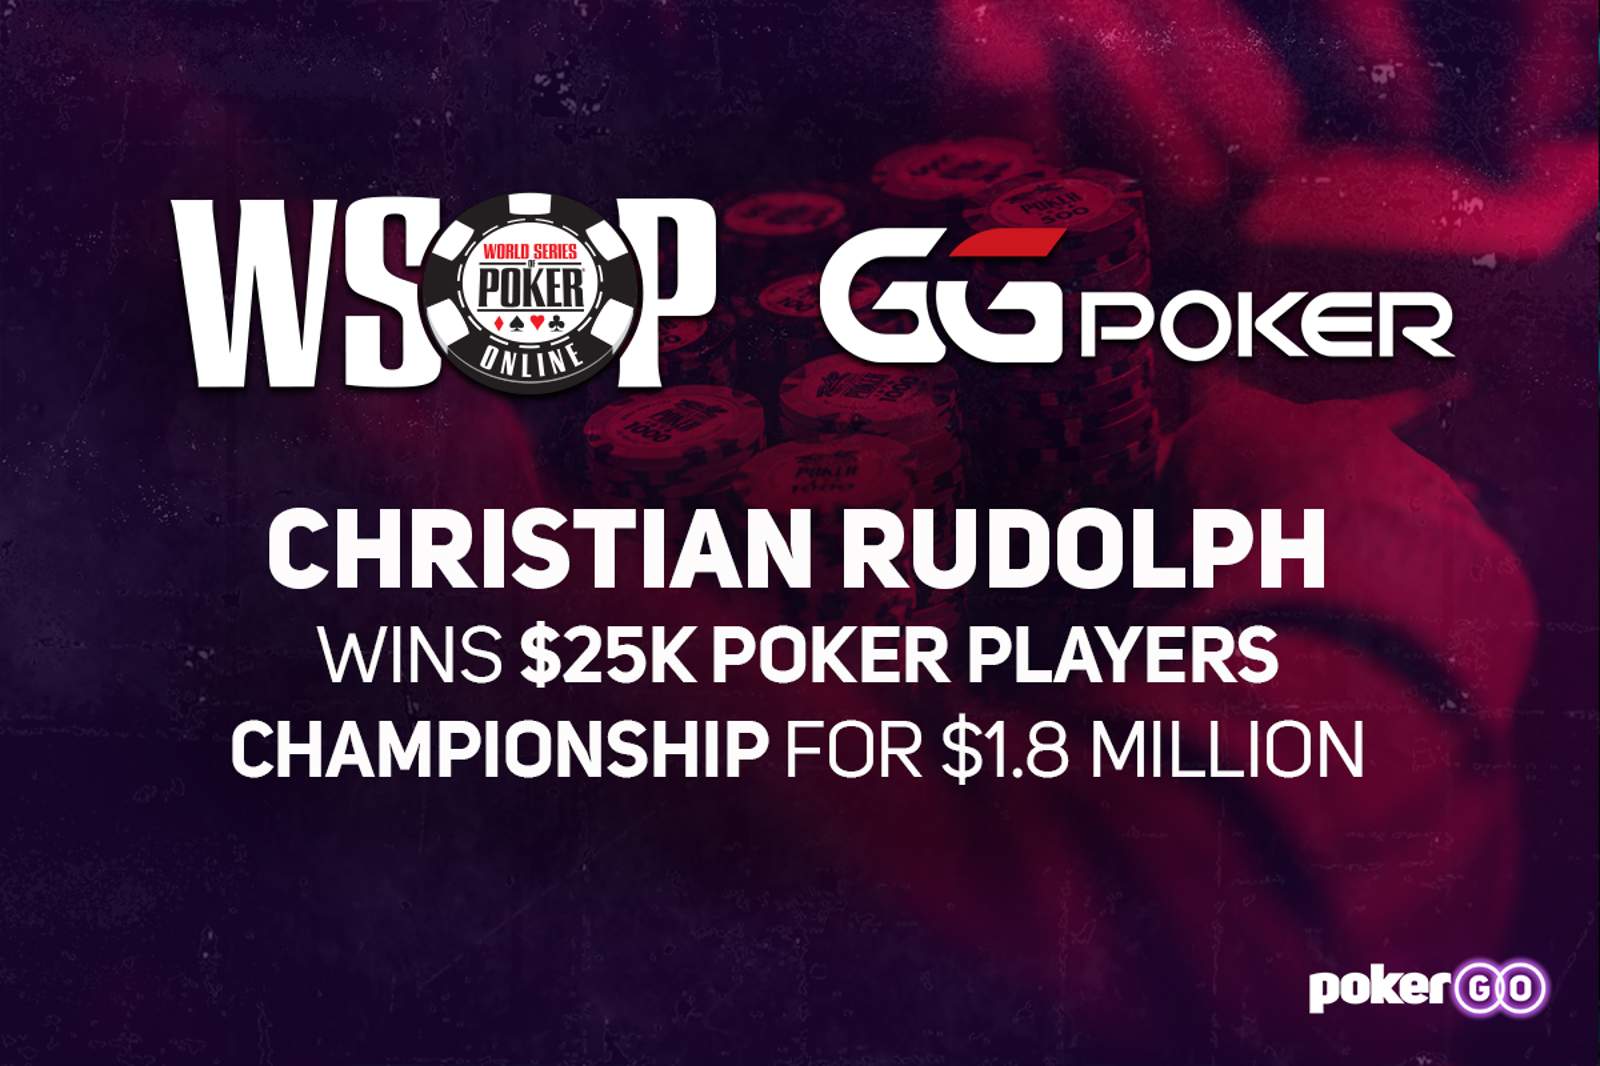 Christian Rudolph Wins GGPoker WSOP Online $25K POKER PLAYERS CHAMPIONSHIP for $1.8 Million